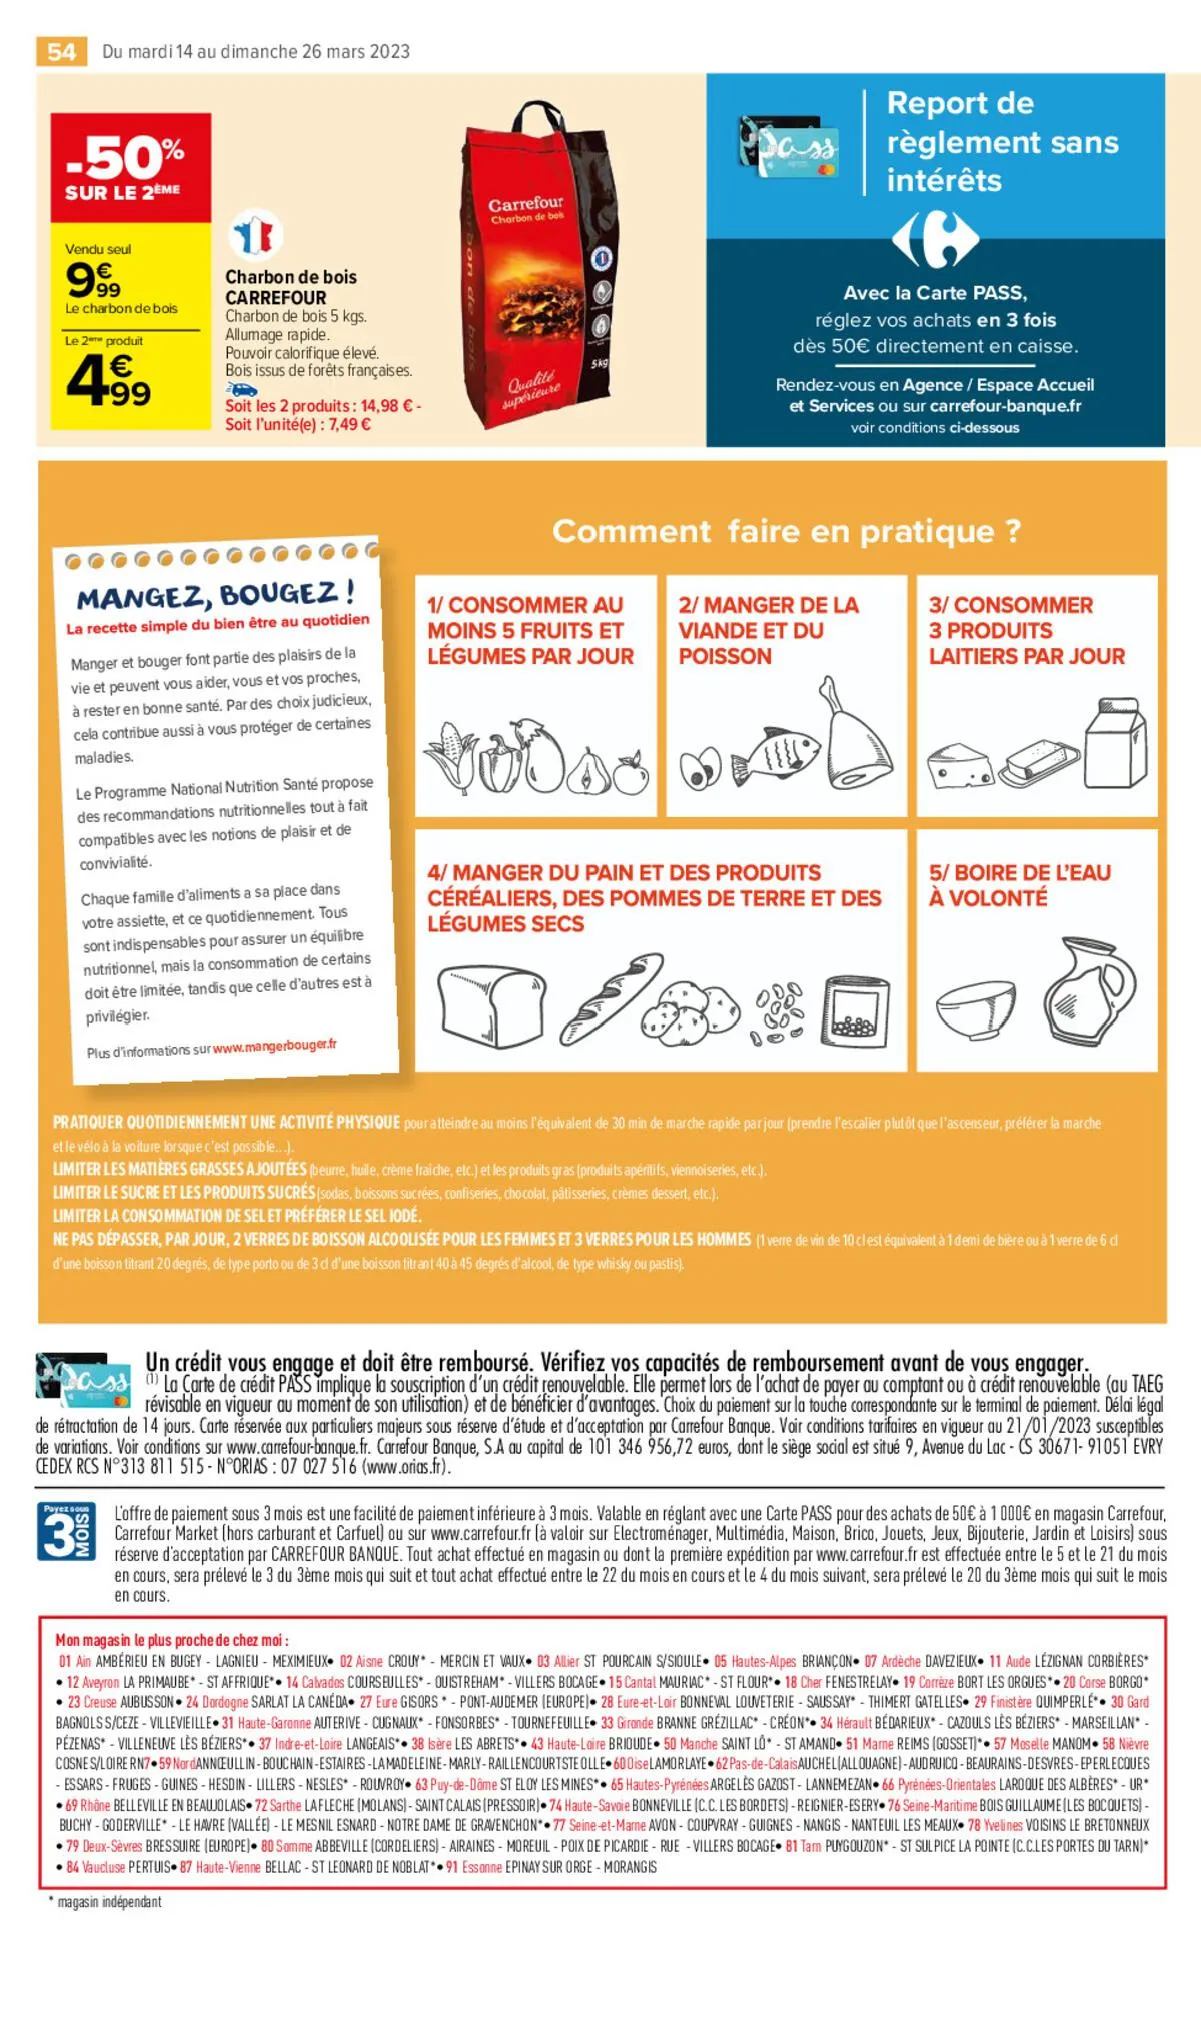 Catalogue Des Promos Vitaminées, page 00056